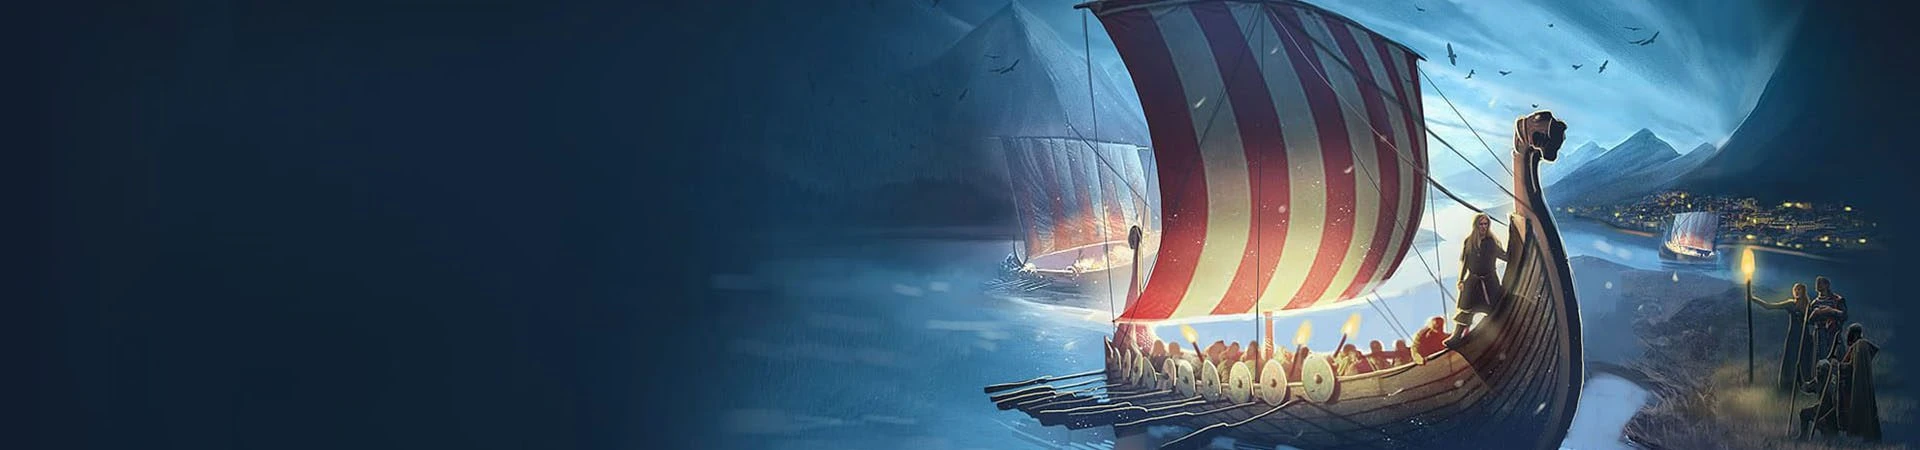 Vikings: War of Clans banner